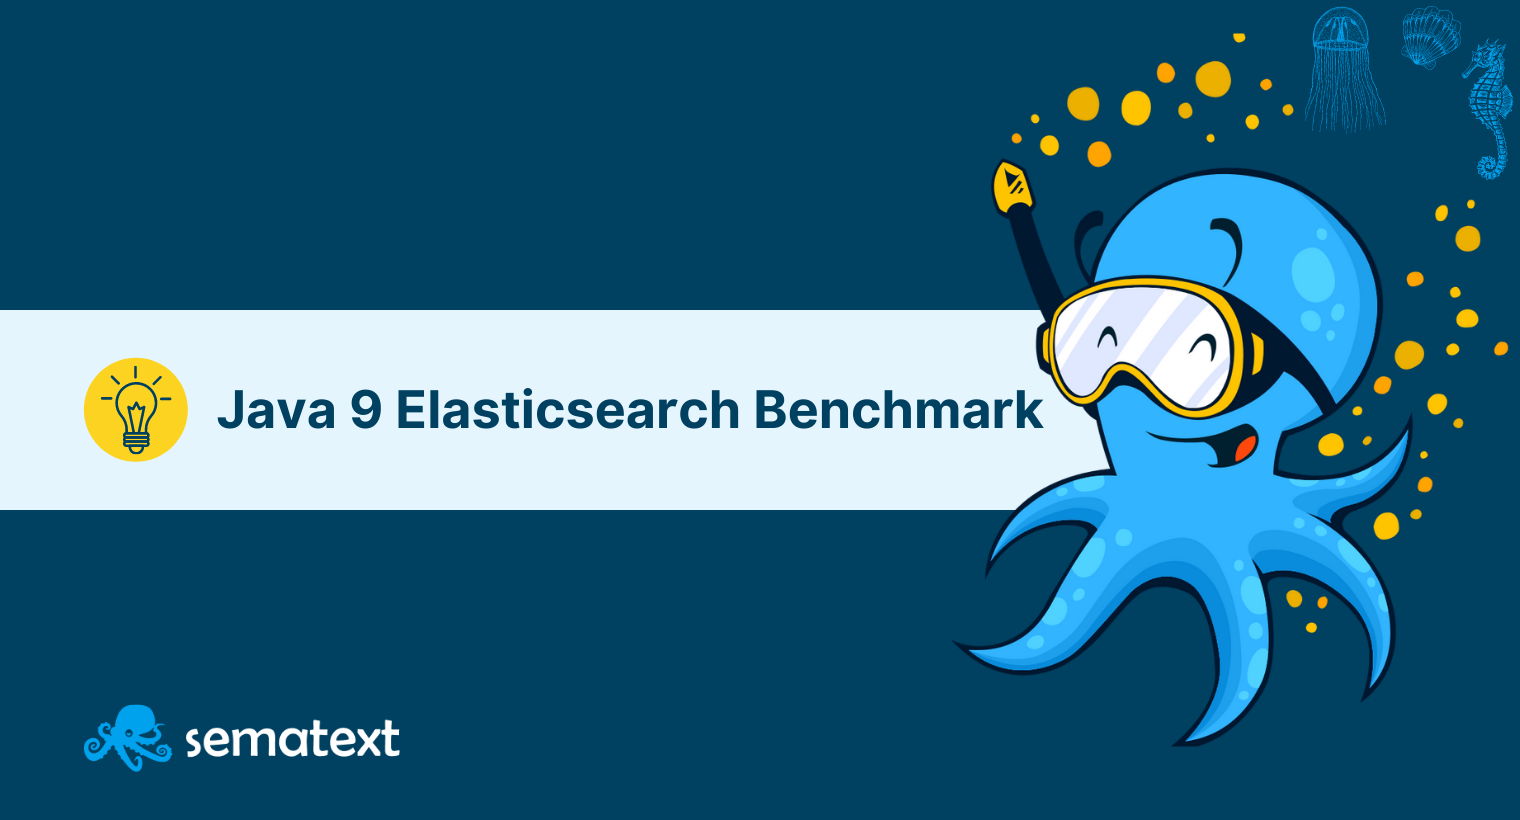 Java 9 Elasticsearch Benchmark